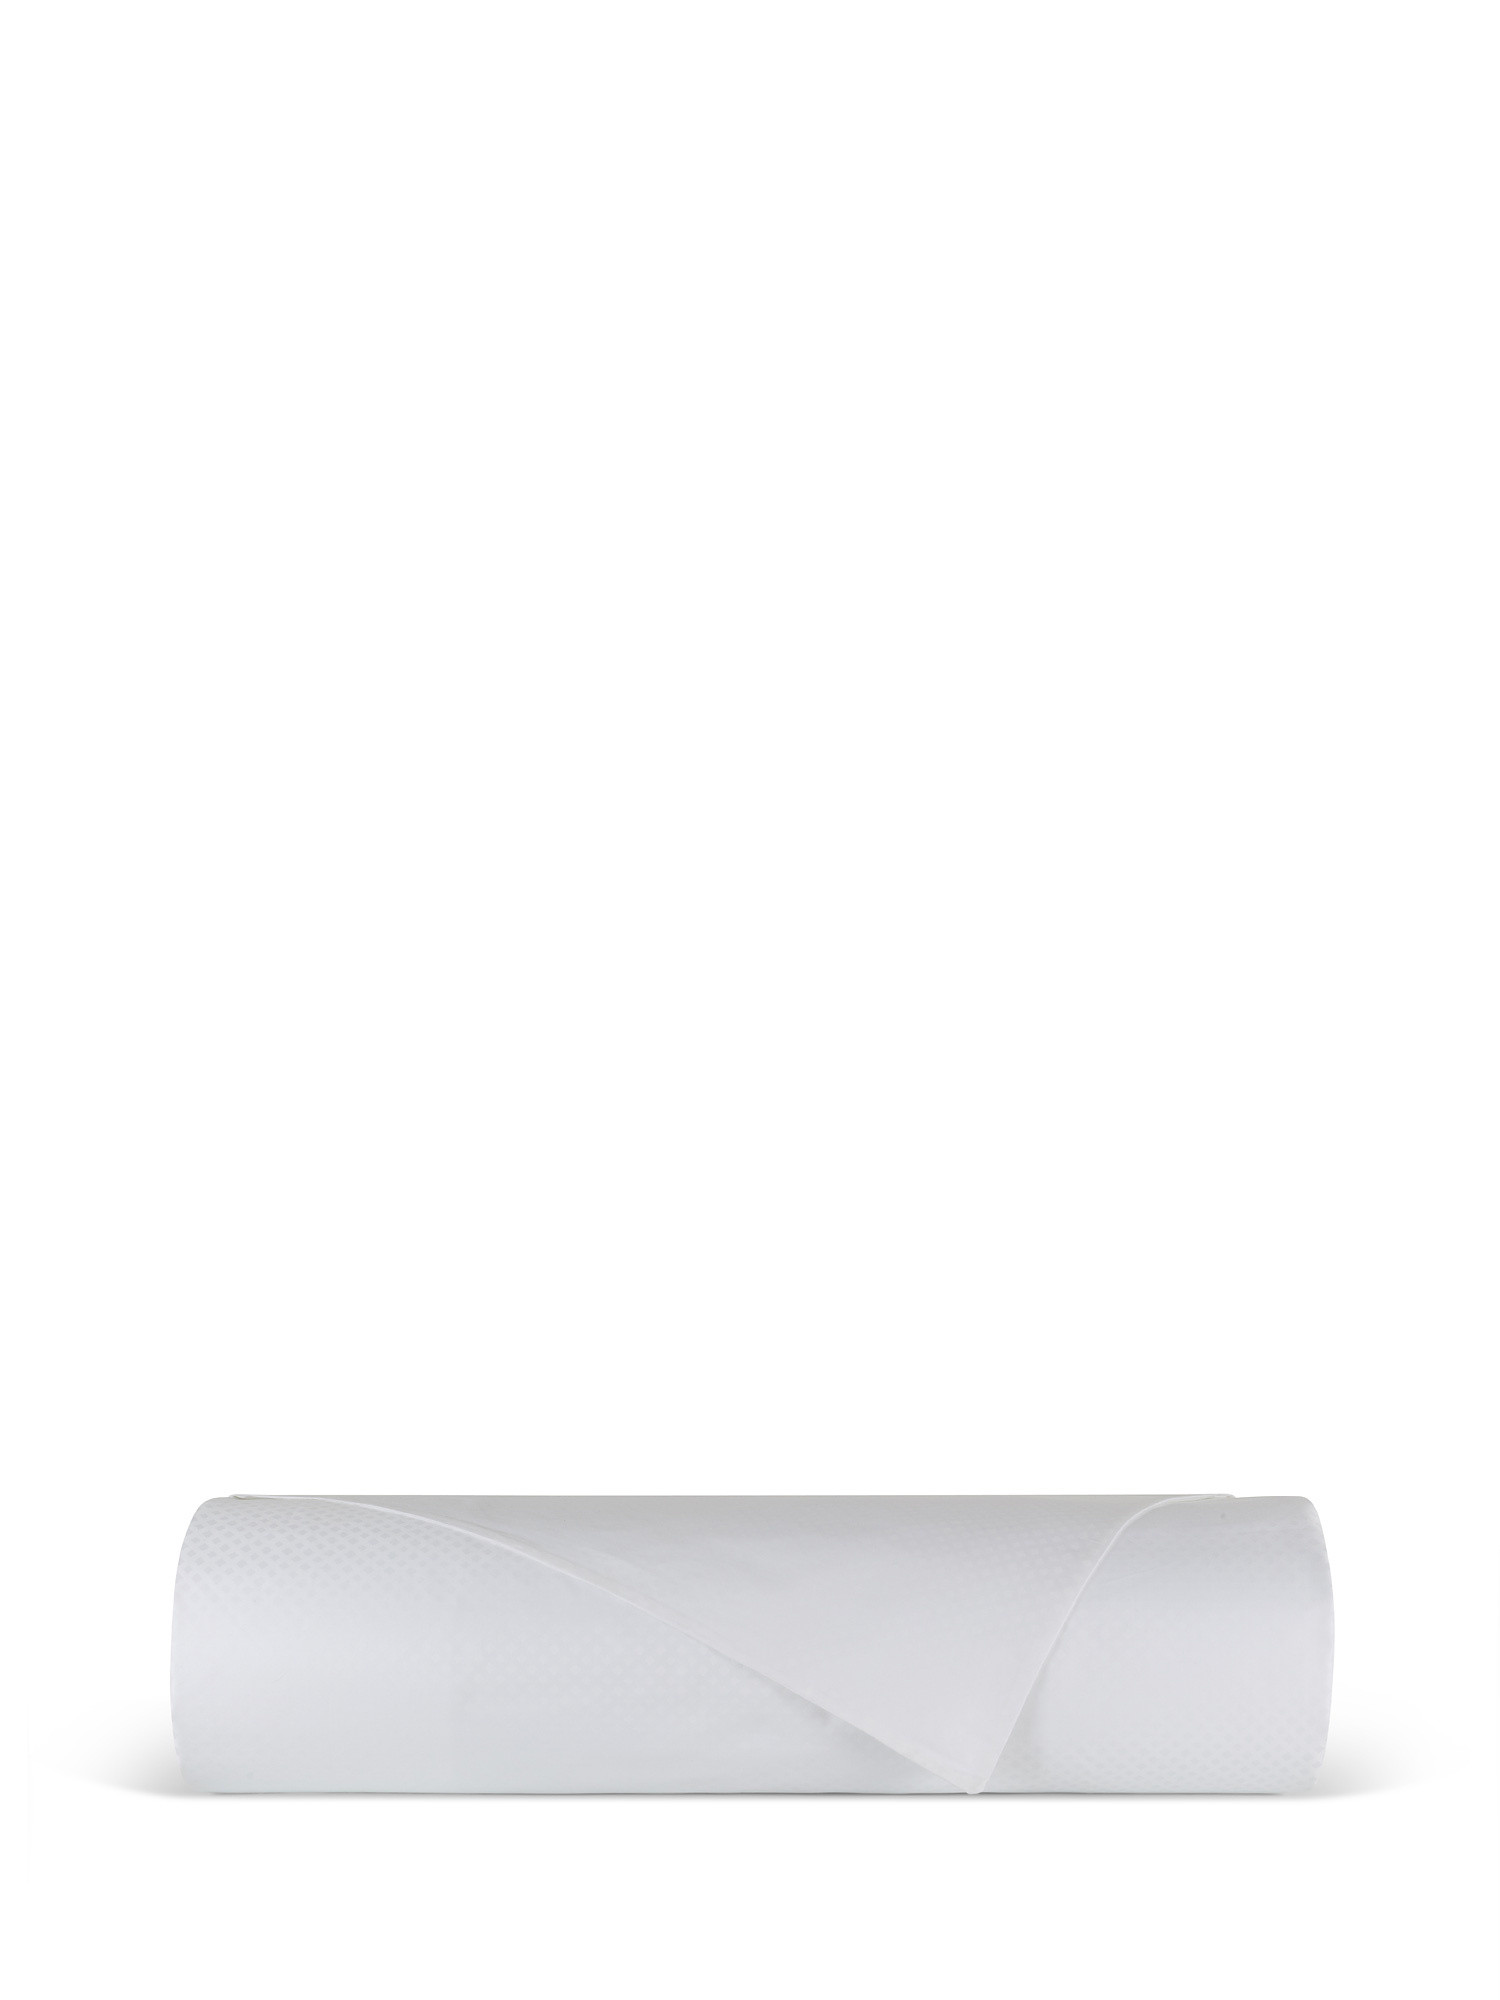 Portofino duvet cover in 100% cotton percale jacquard, White, large image number 1